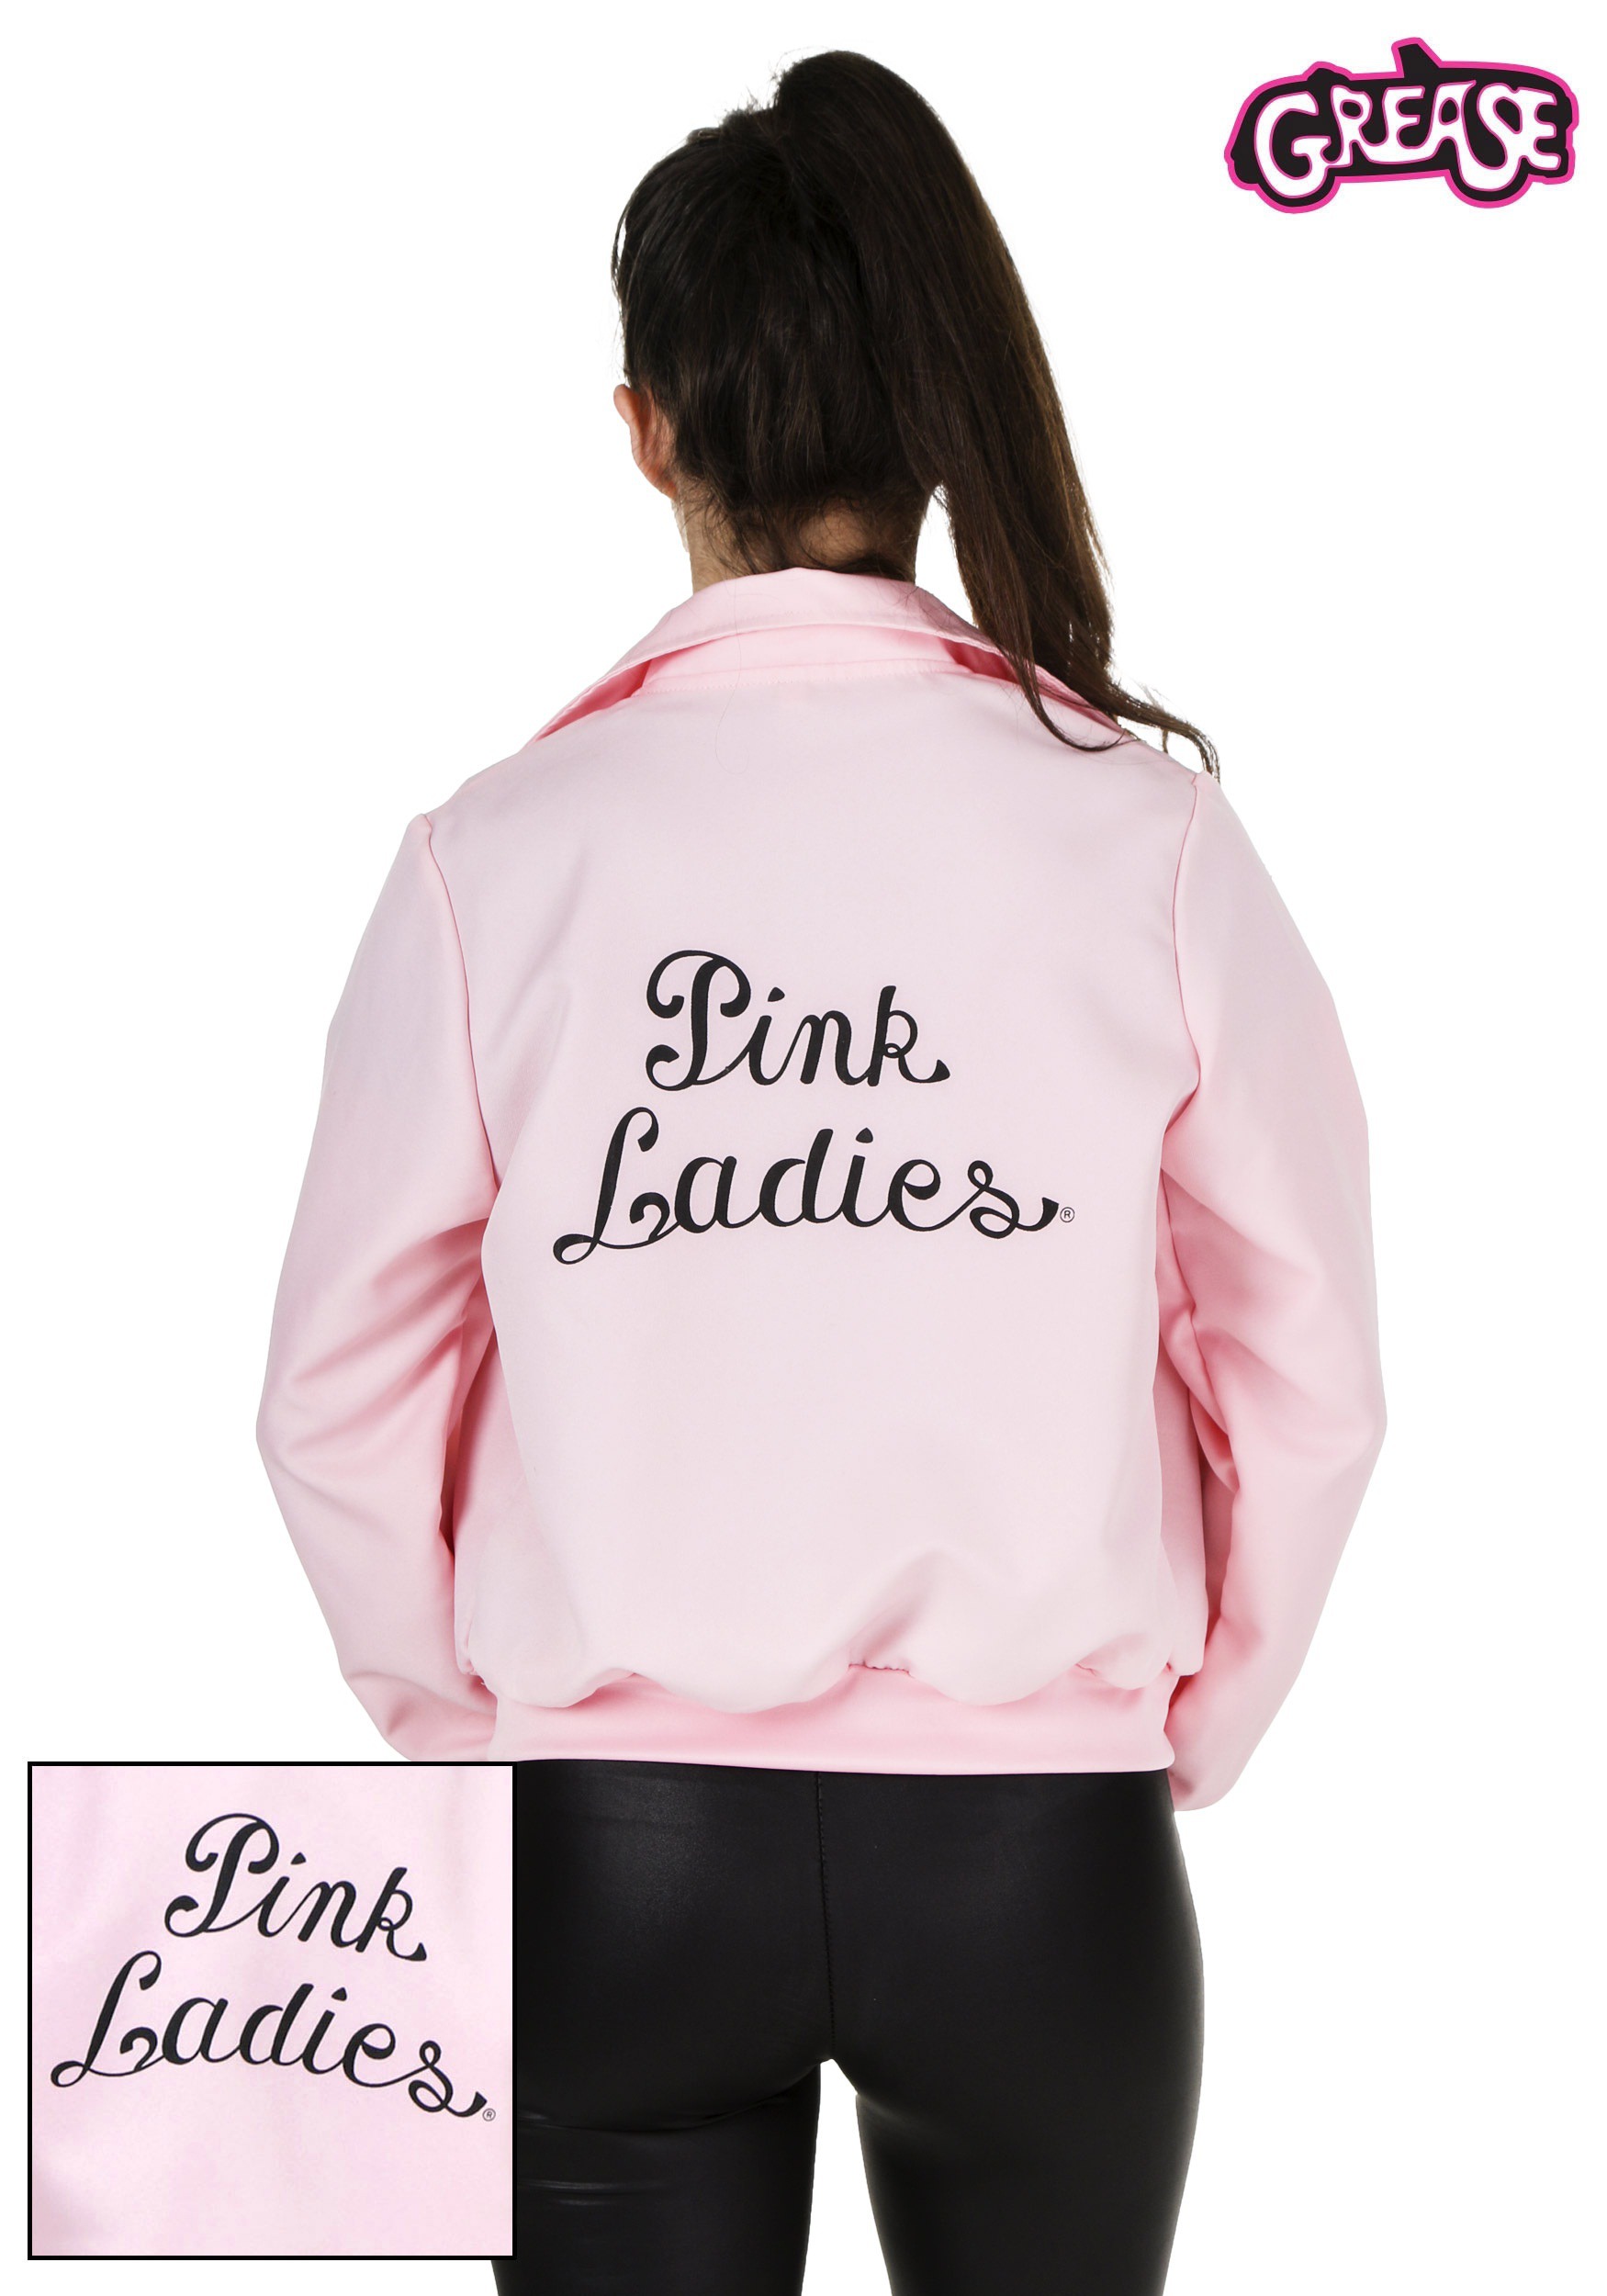 Adult Deluxe Pink Ladies Jacket Costume